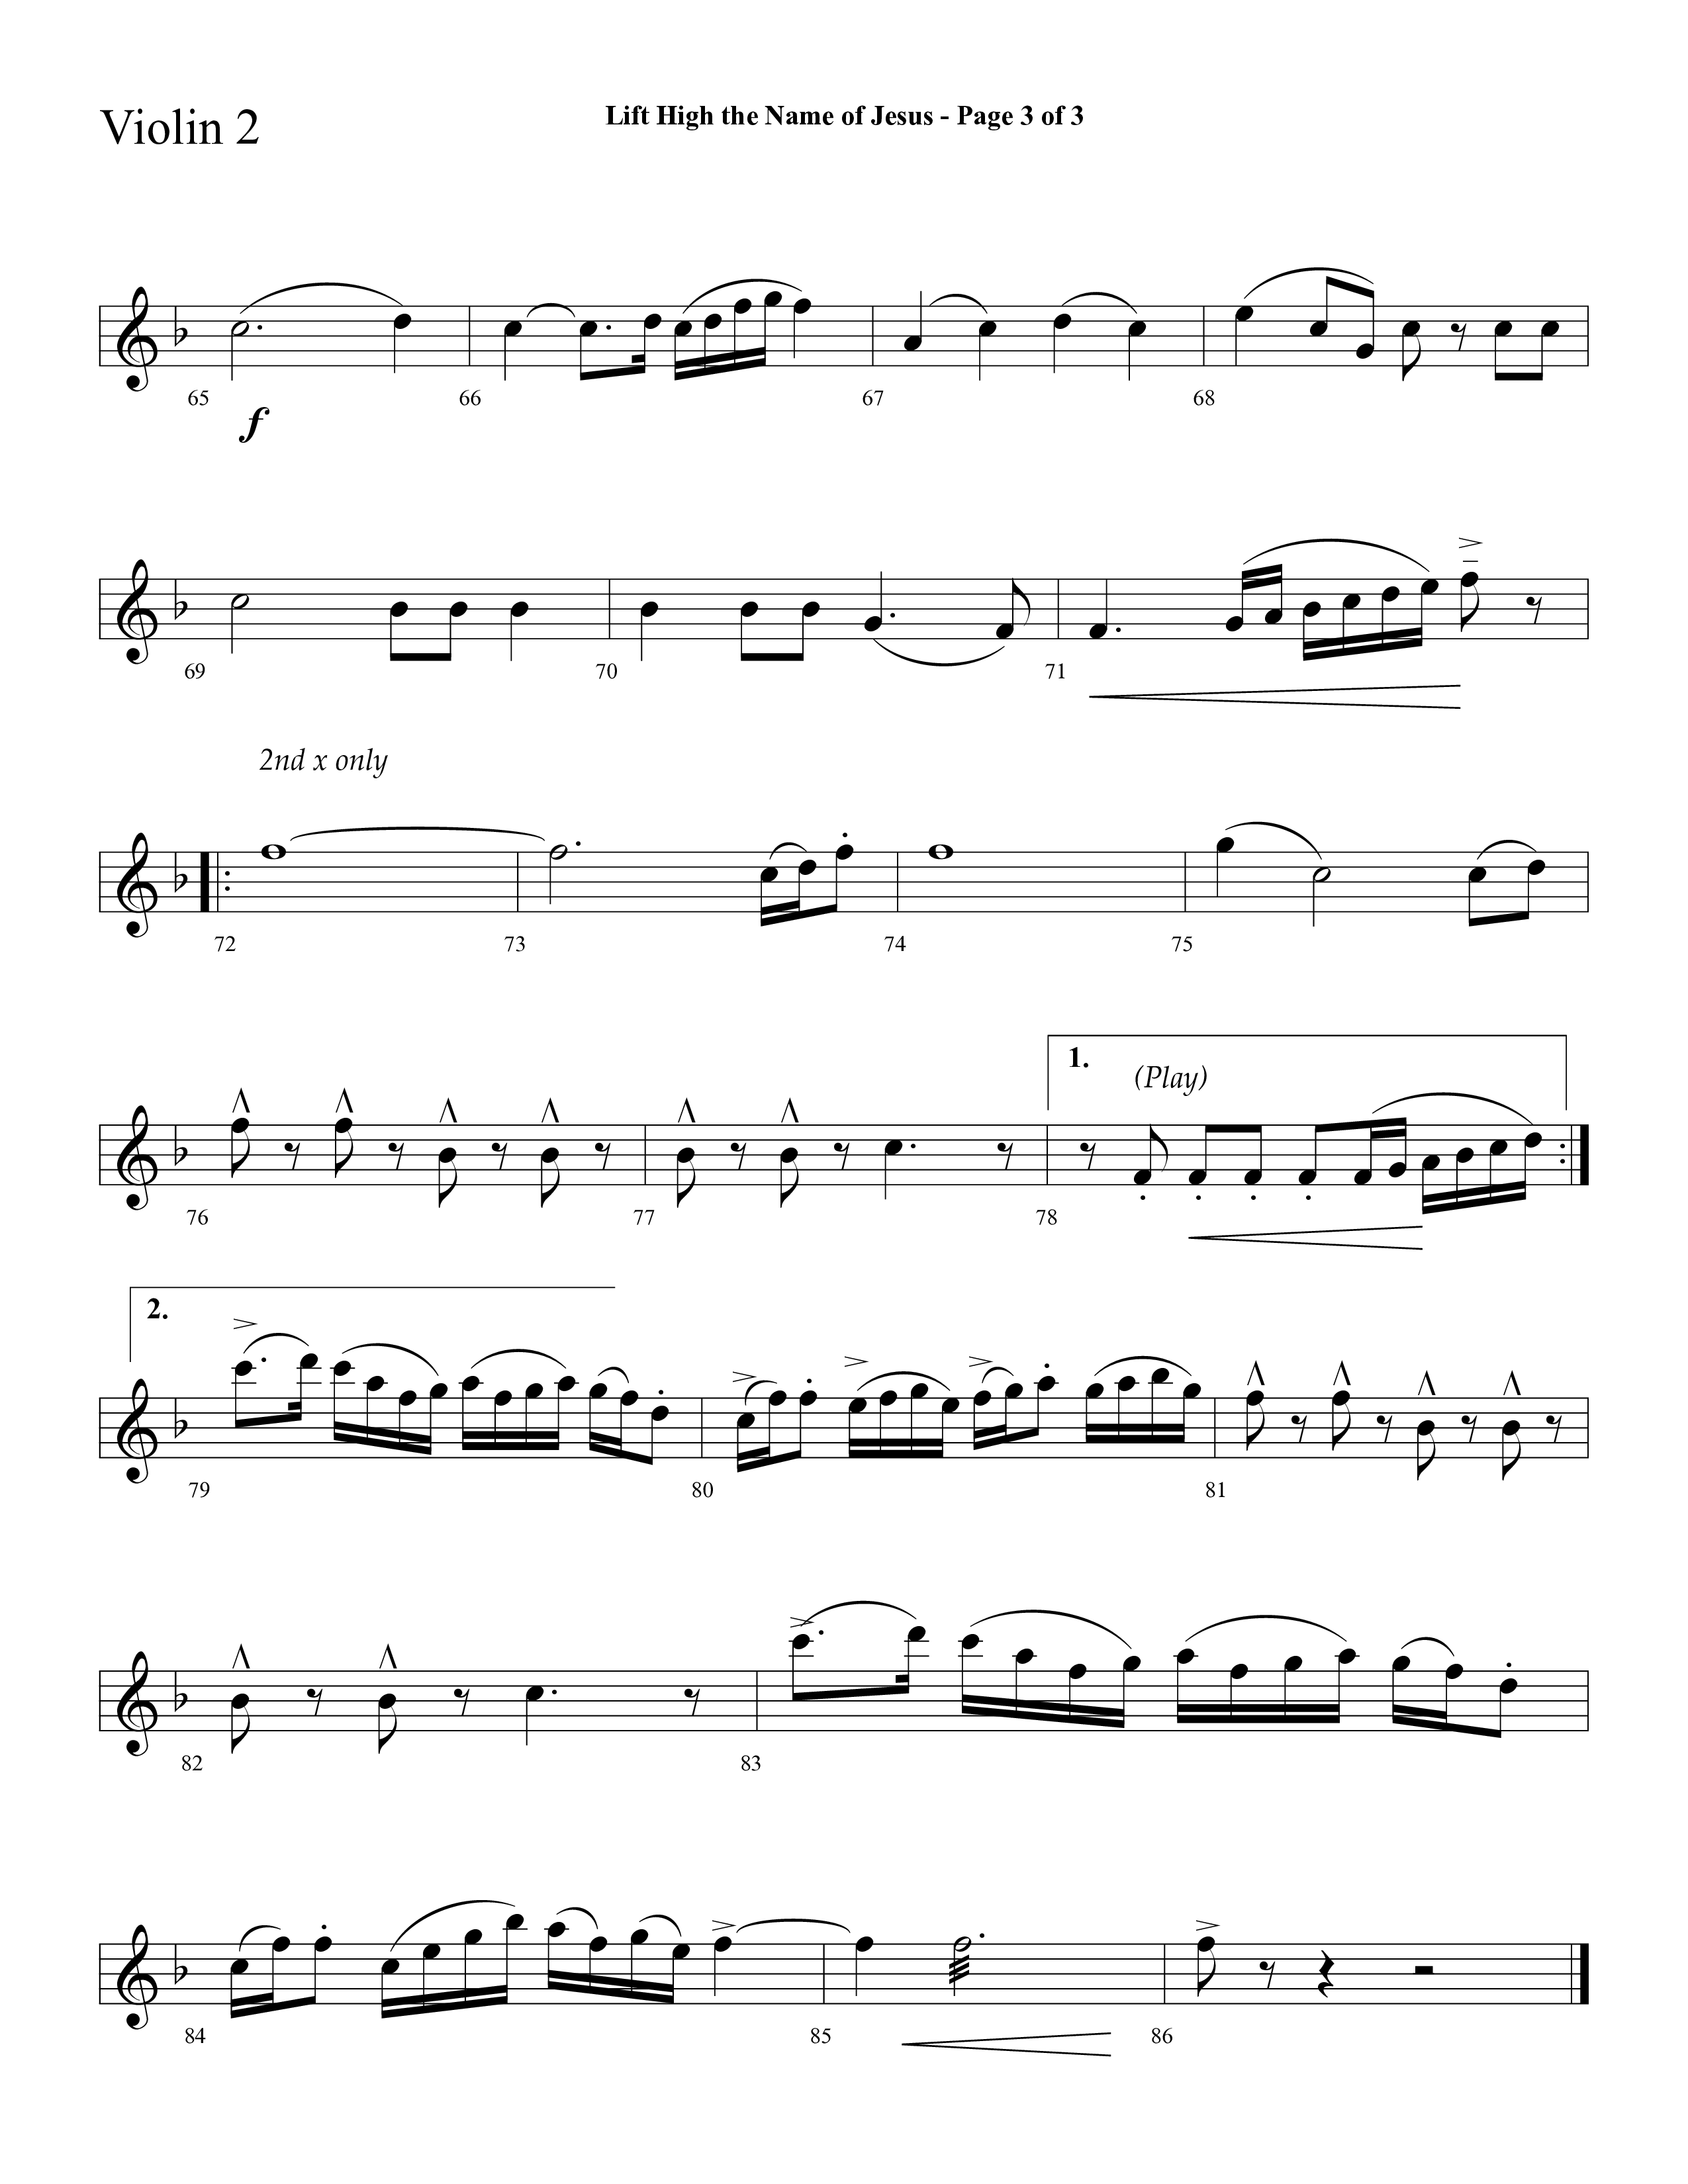 Lift High The Name Of Jesus (Choral Anthem SATB) Violin 2 (Lifeway Choral / Arr. David Hamilton)